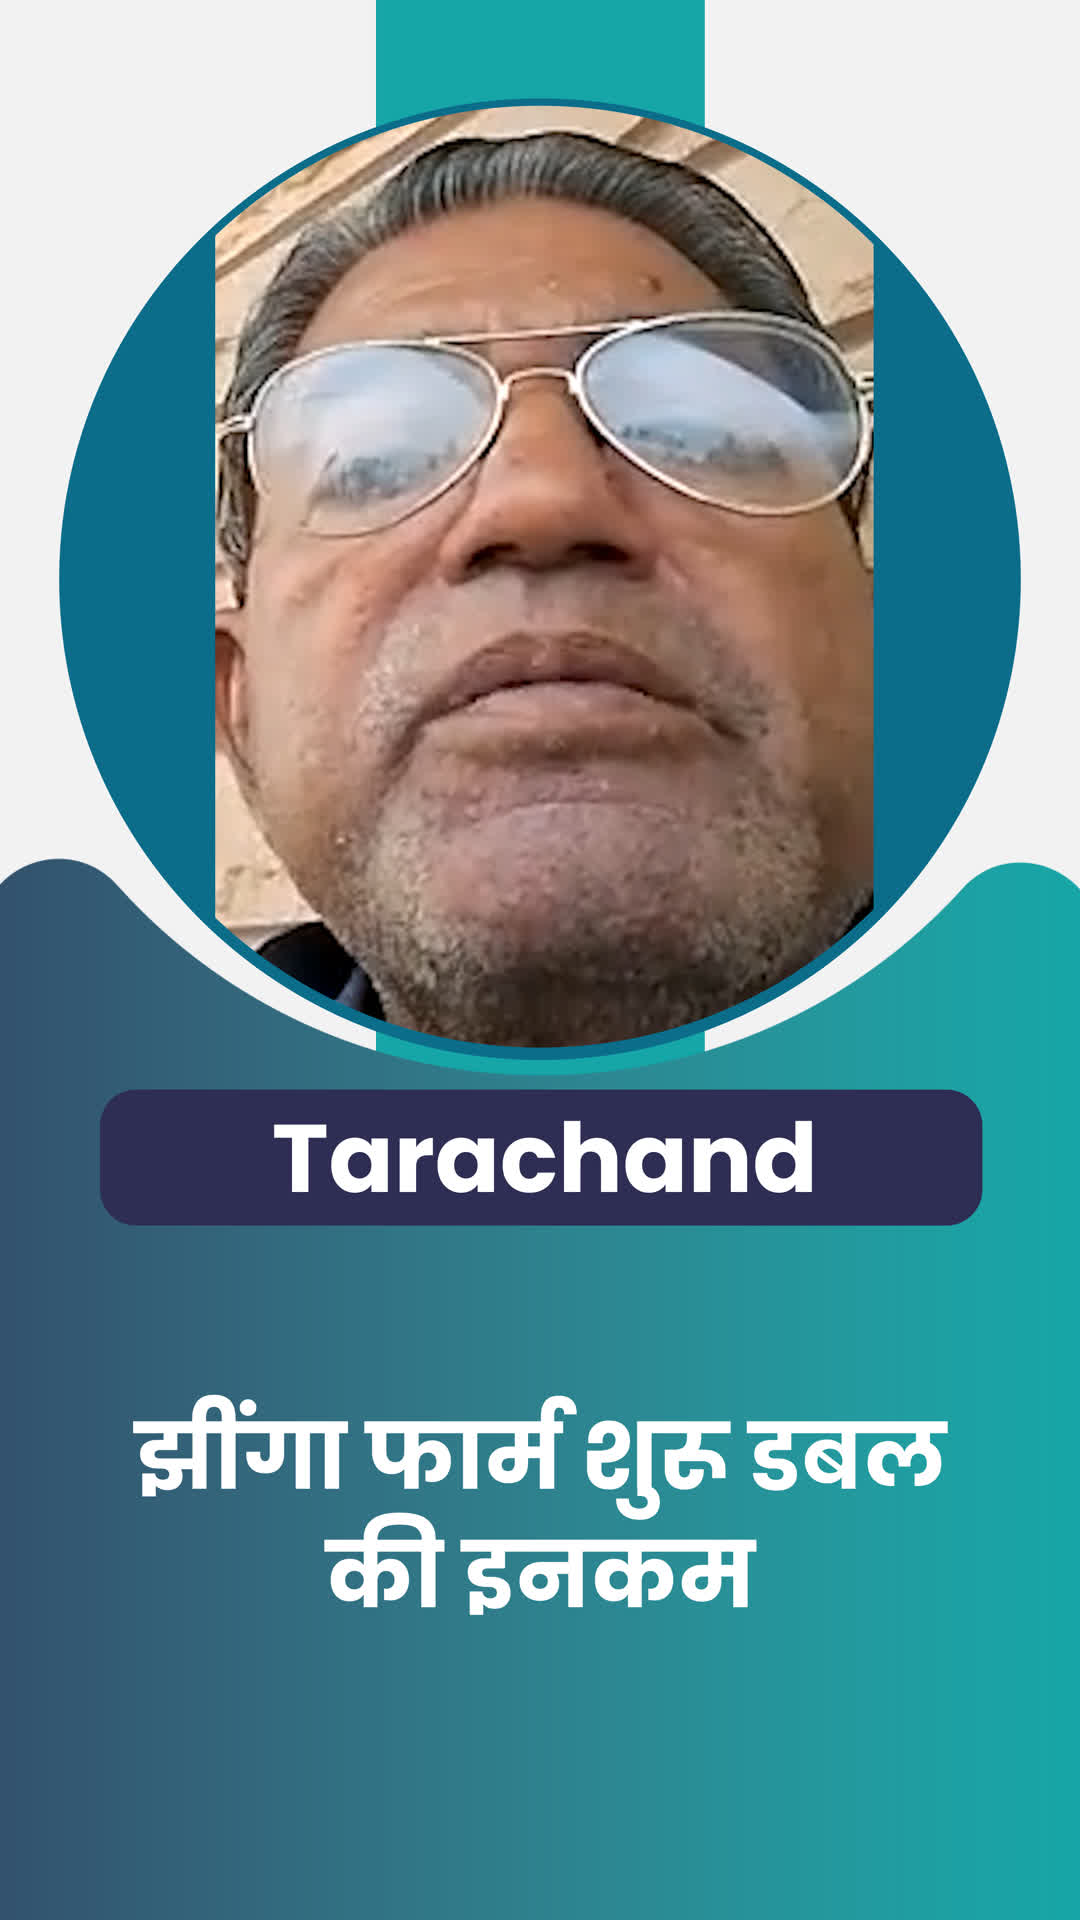 Tara chand jatol's Honest Review of ffreedom app - Barmer ,Rajasthan